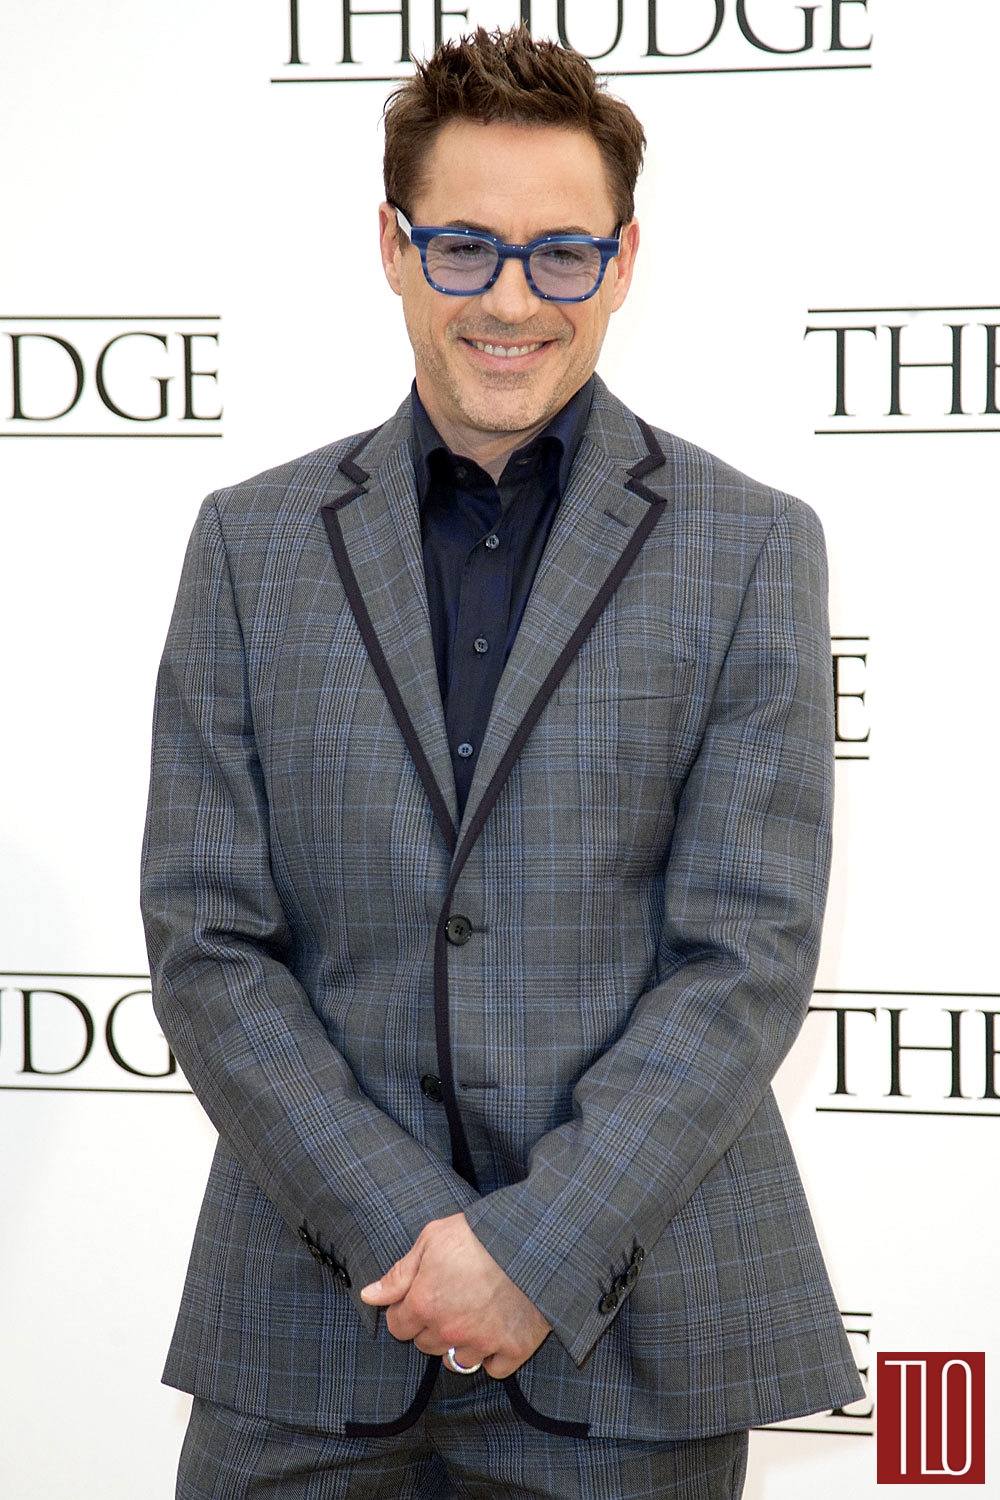 Robert-Downey-Jr-The-Judge-Rome-Photocall-Red-Carpet-Fashion-Tom-Lorenzo-Site-TLO (1)